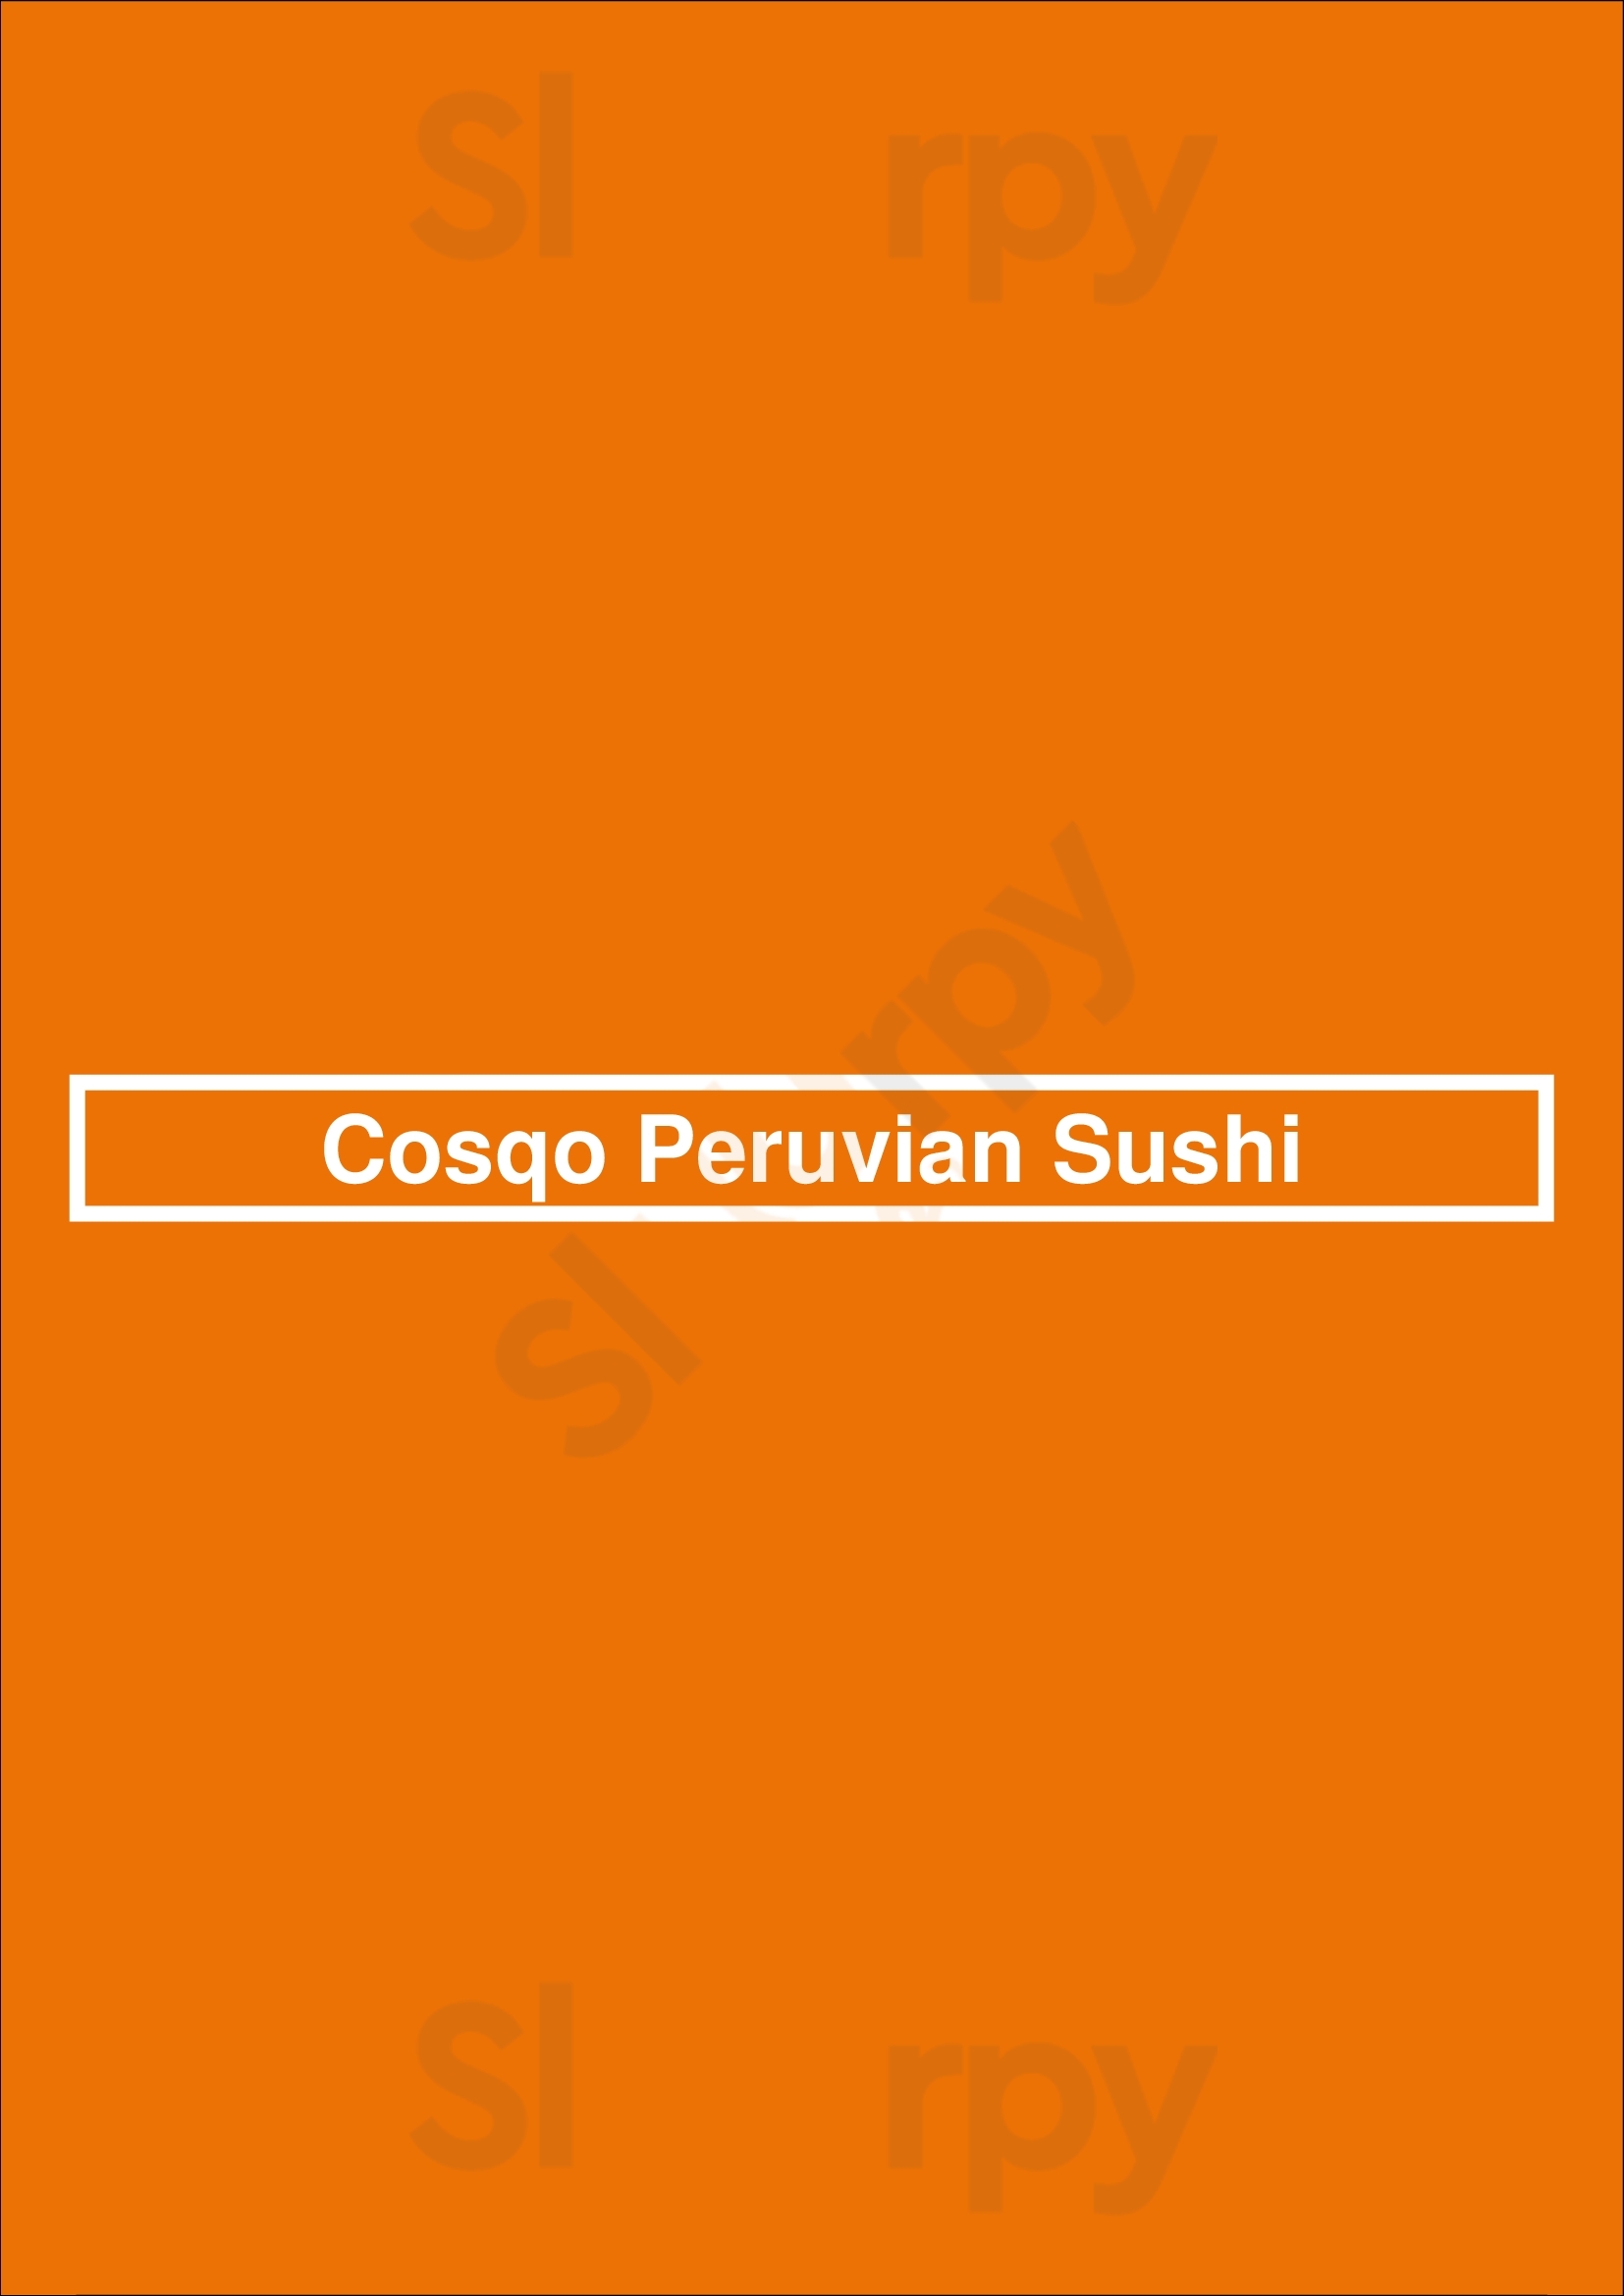 Cosqo Peruvian Sushi Tigre Menu - 1